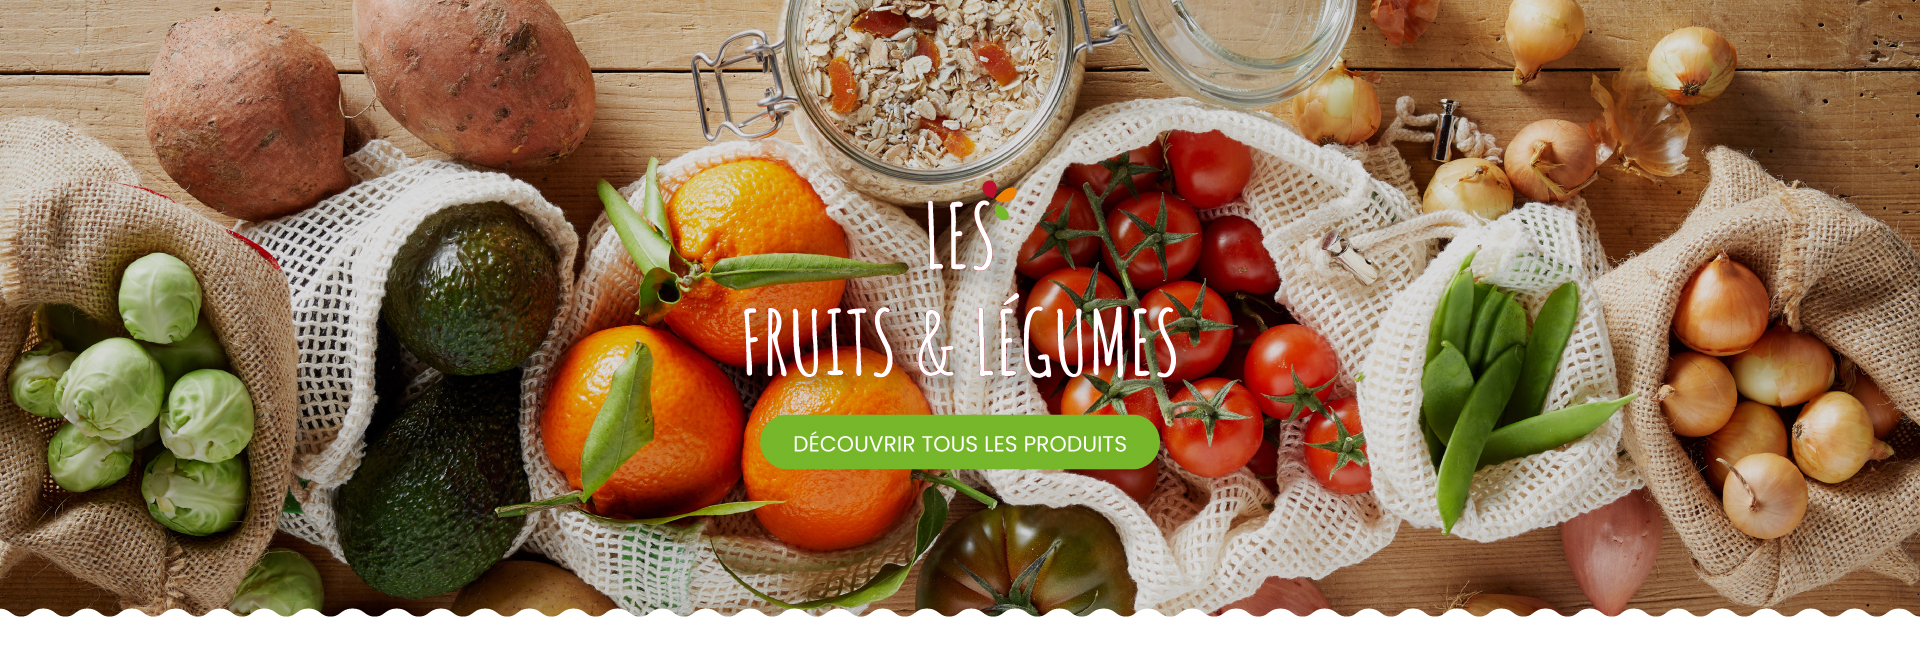 Fruit legumes